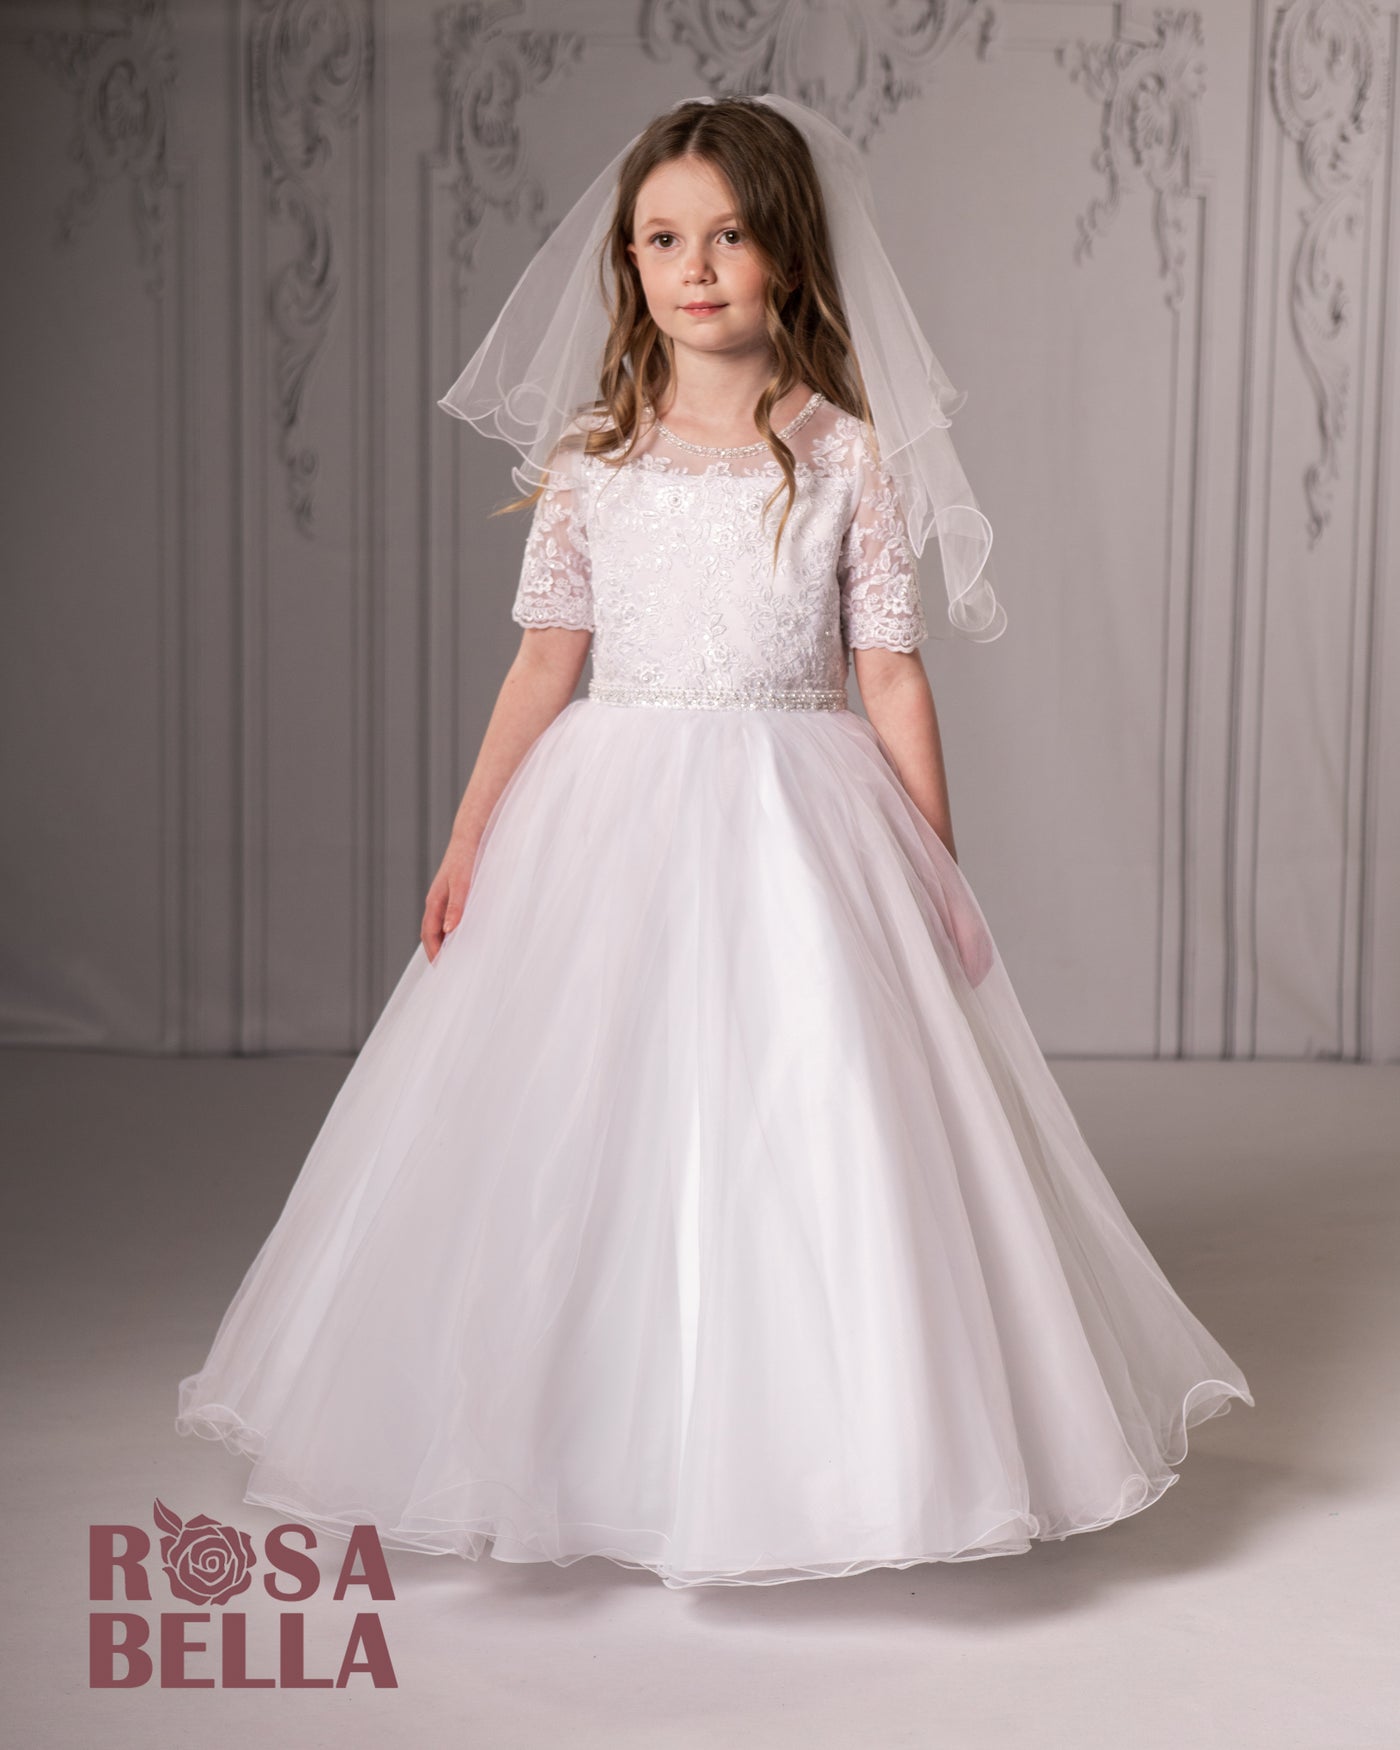 Rosa Bella Communion Dress RB641